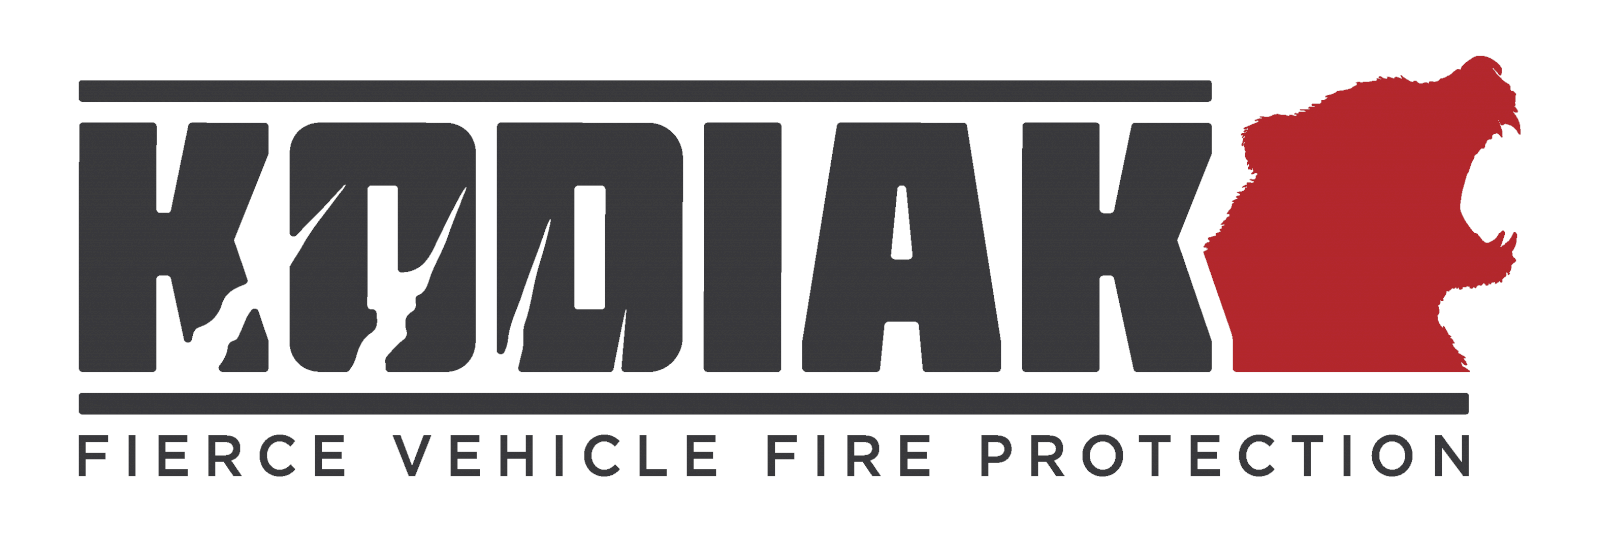 kodiak vehicle fire protection logo